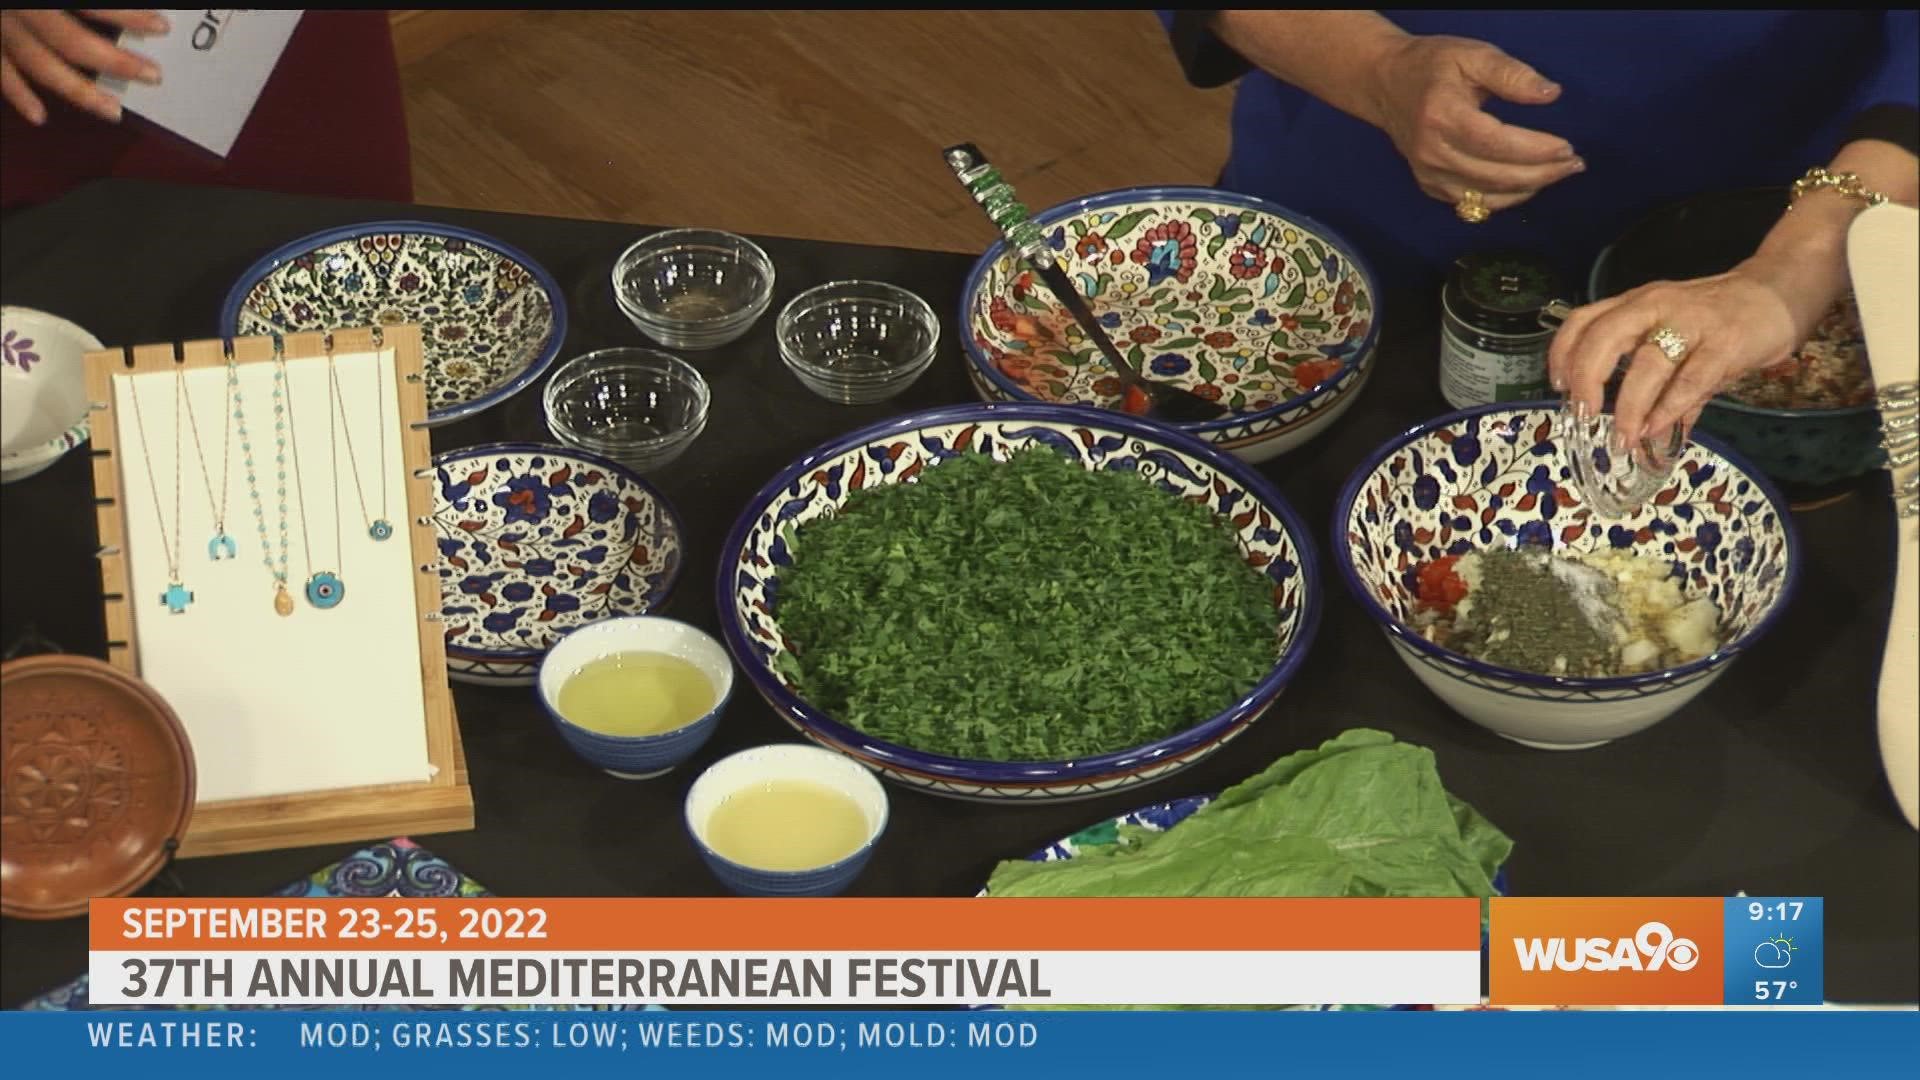 The 37th annual Mediterranean Festival kicks off today Friday, September 23rd, 2022 and runs through Sunday, September 25th, 2022.